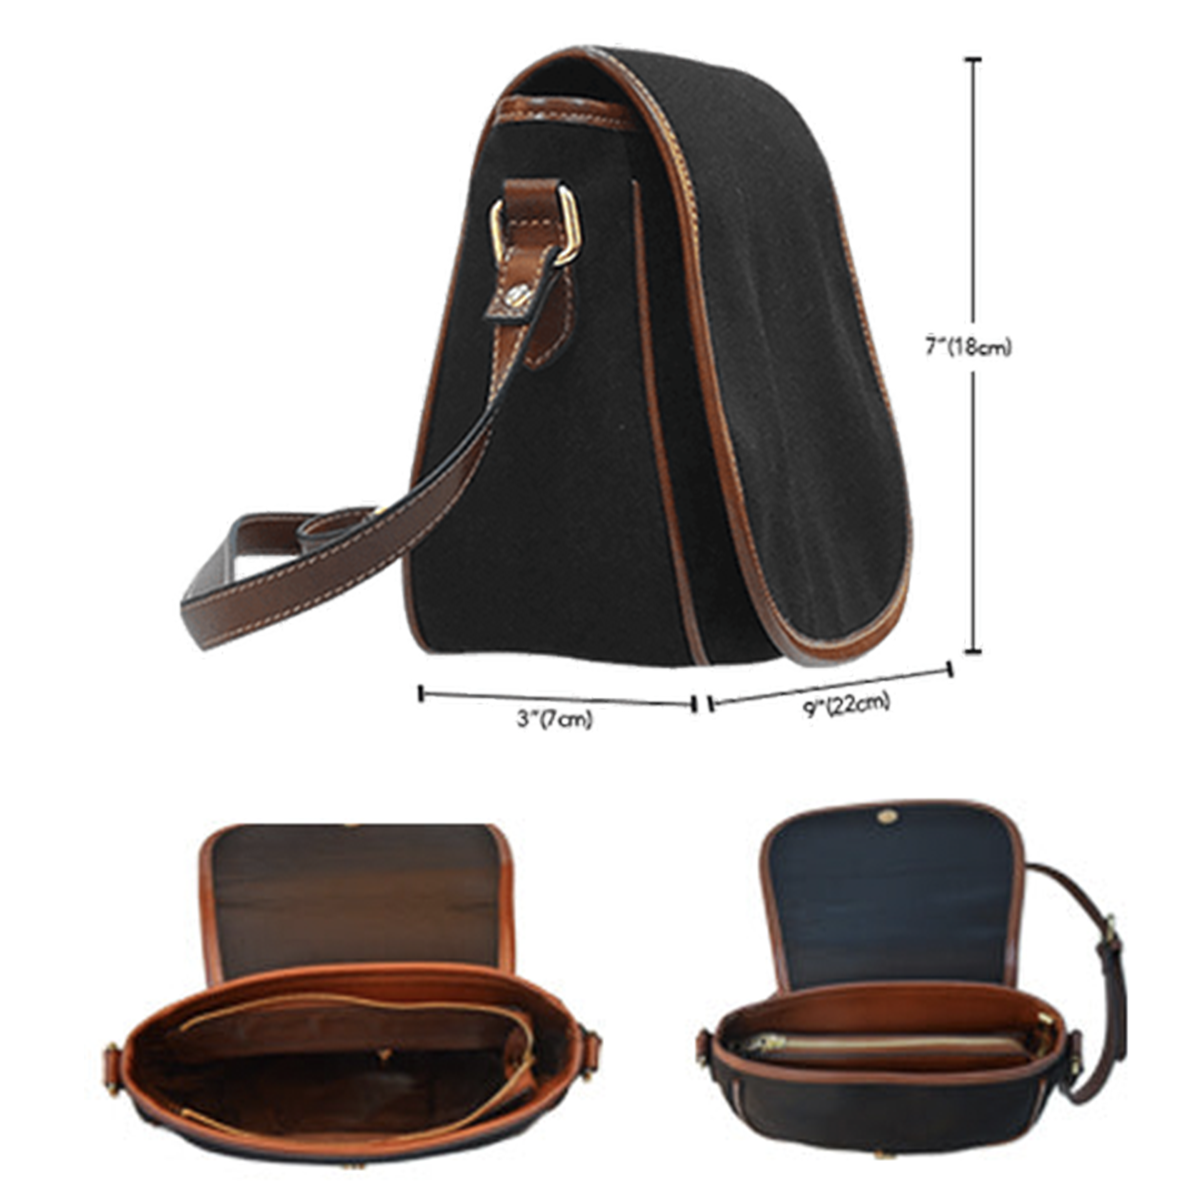 Anderson Modern Tartan Saddle Handbags